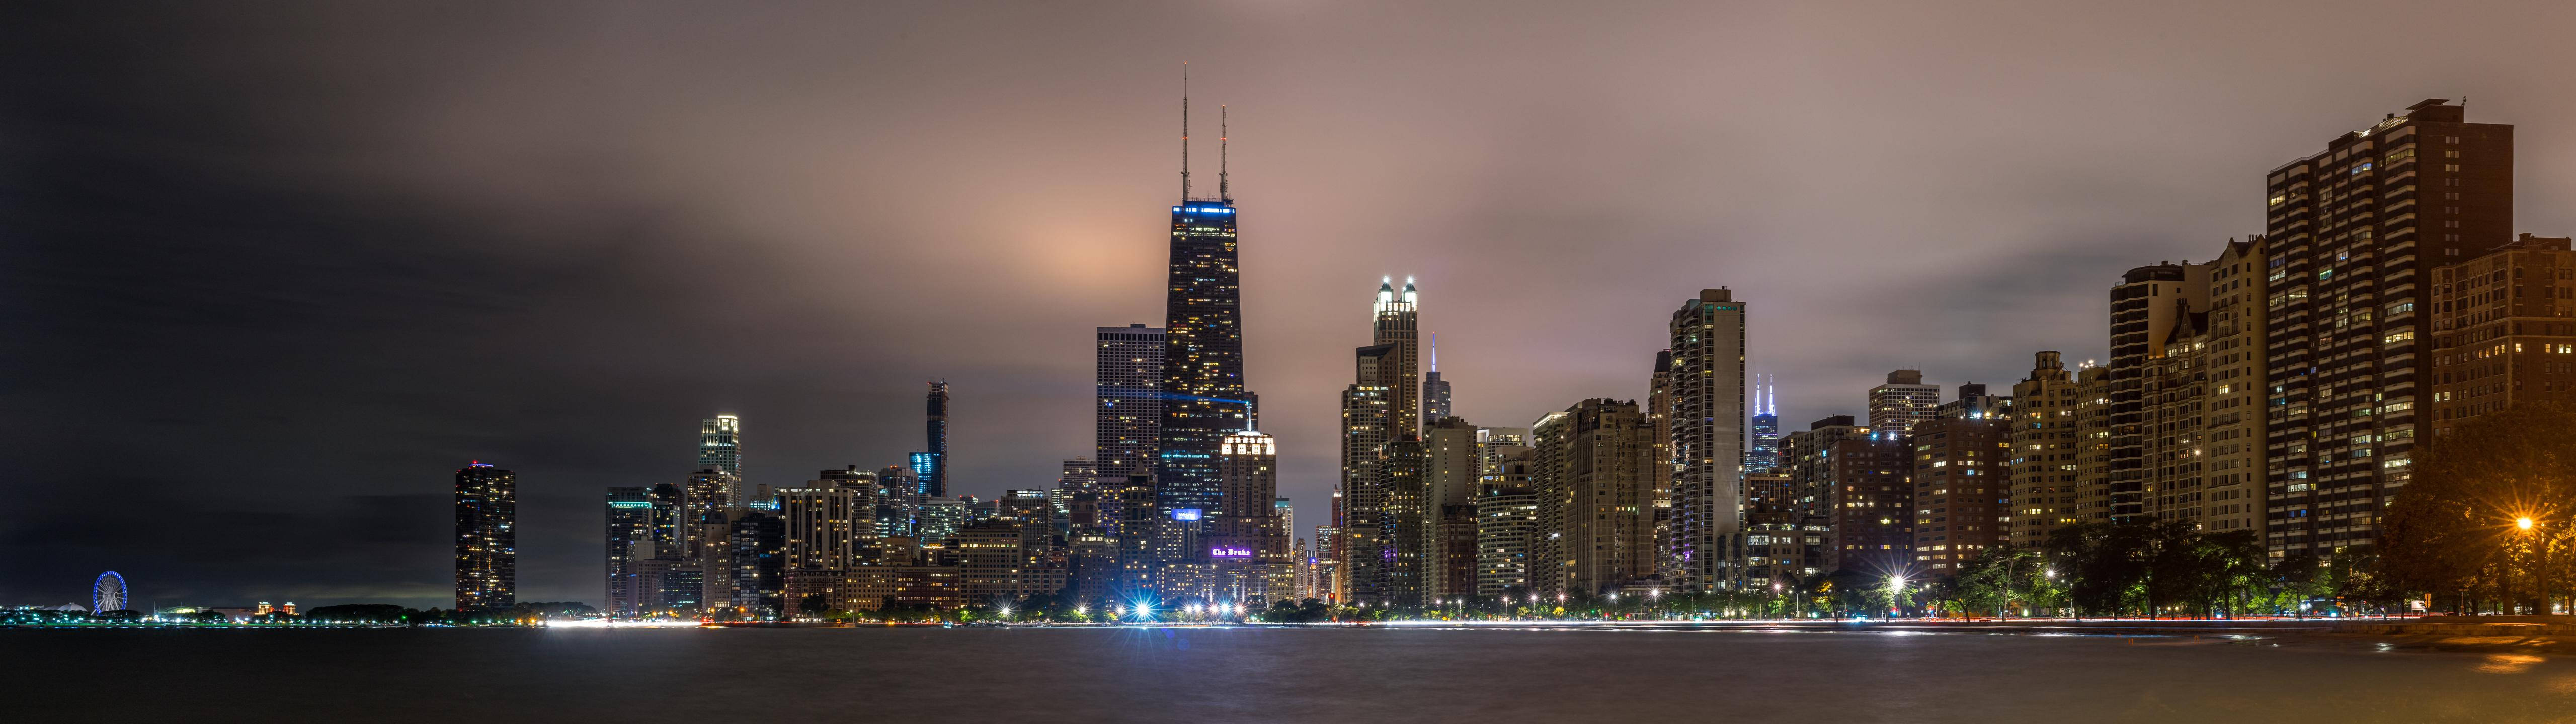 4k Dual Monitor Chicago Skyline At Night